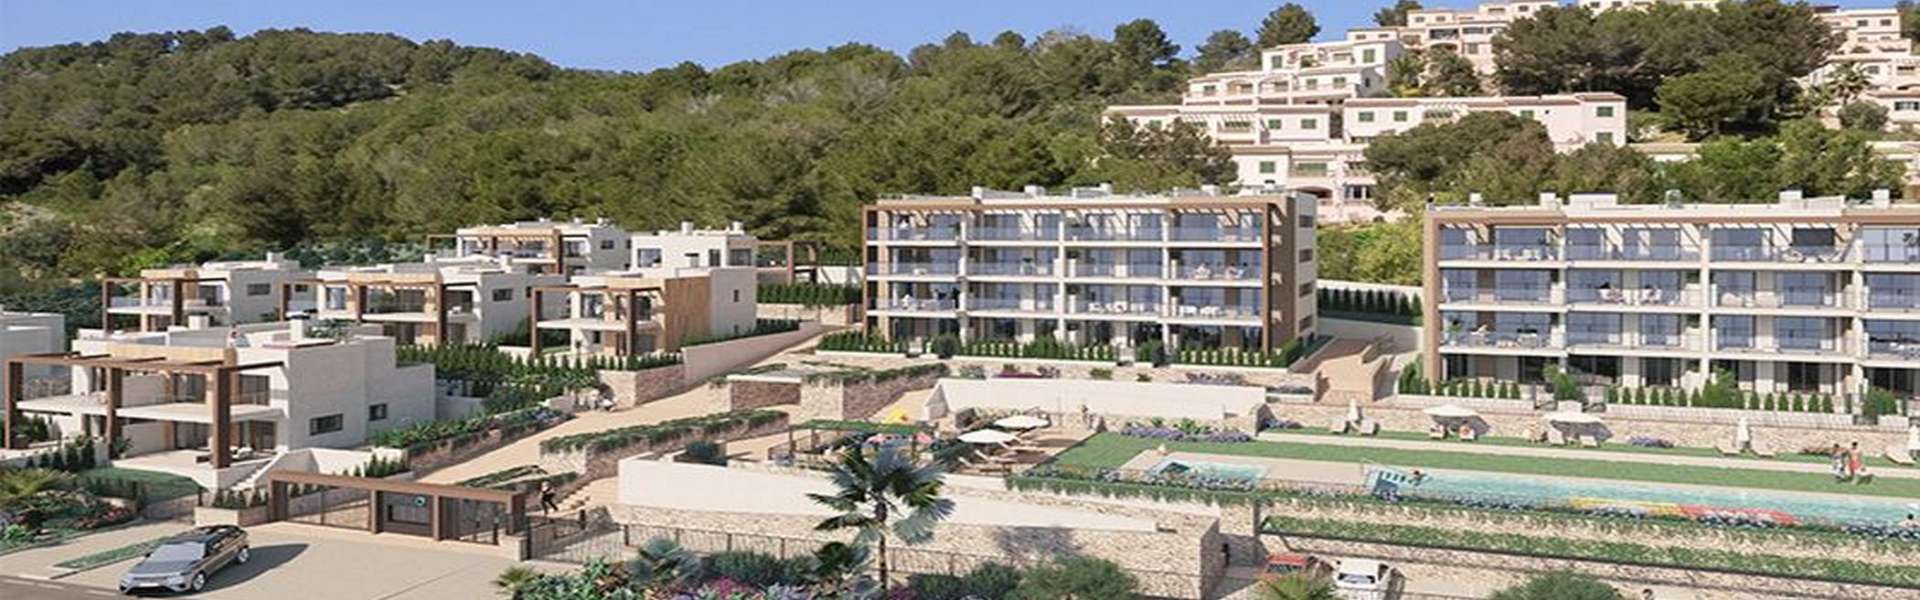 Capdepera/Sa Font de Sa Cala - Apartments in privileged location